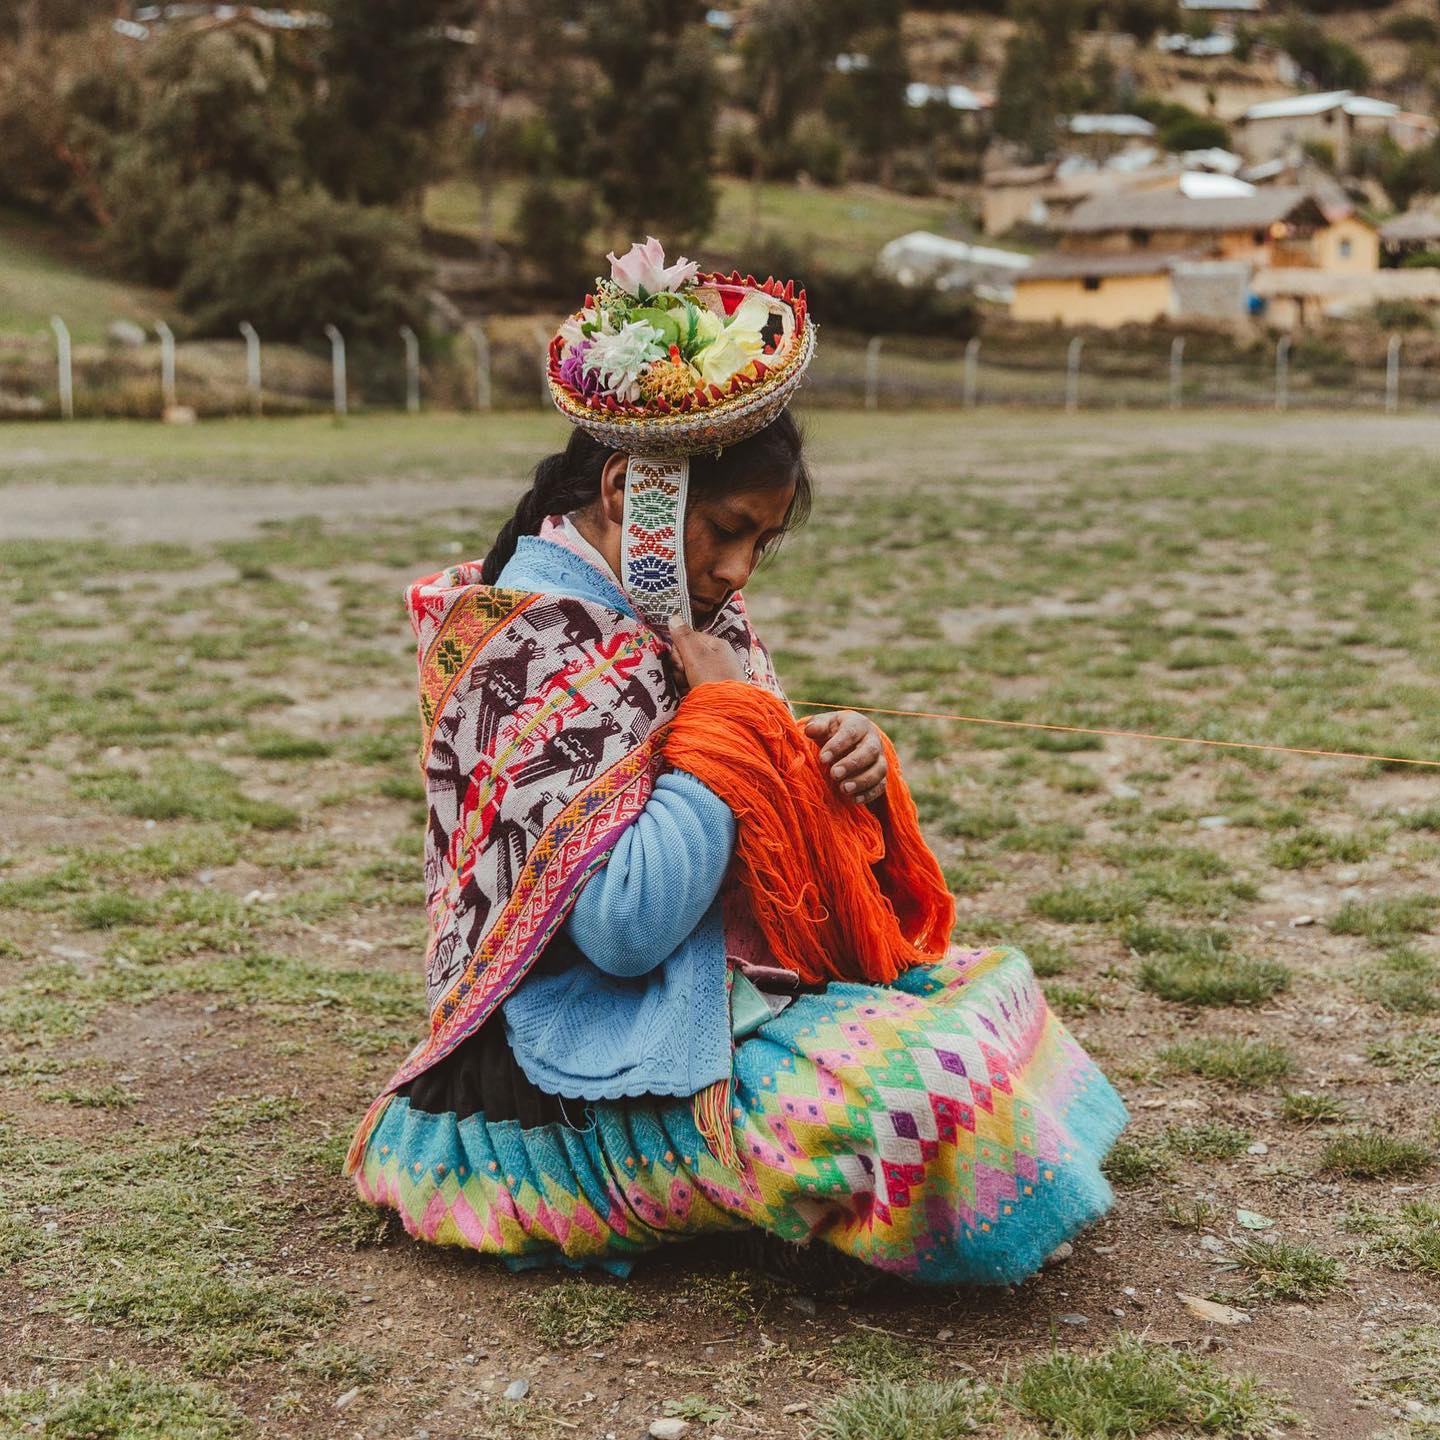 Ropa típica peruana - women